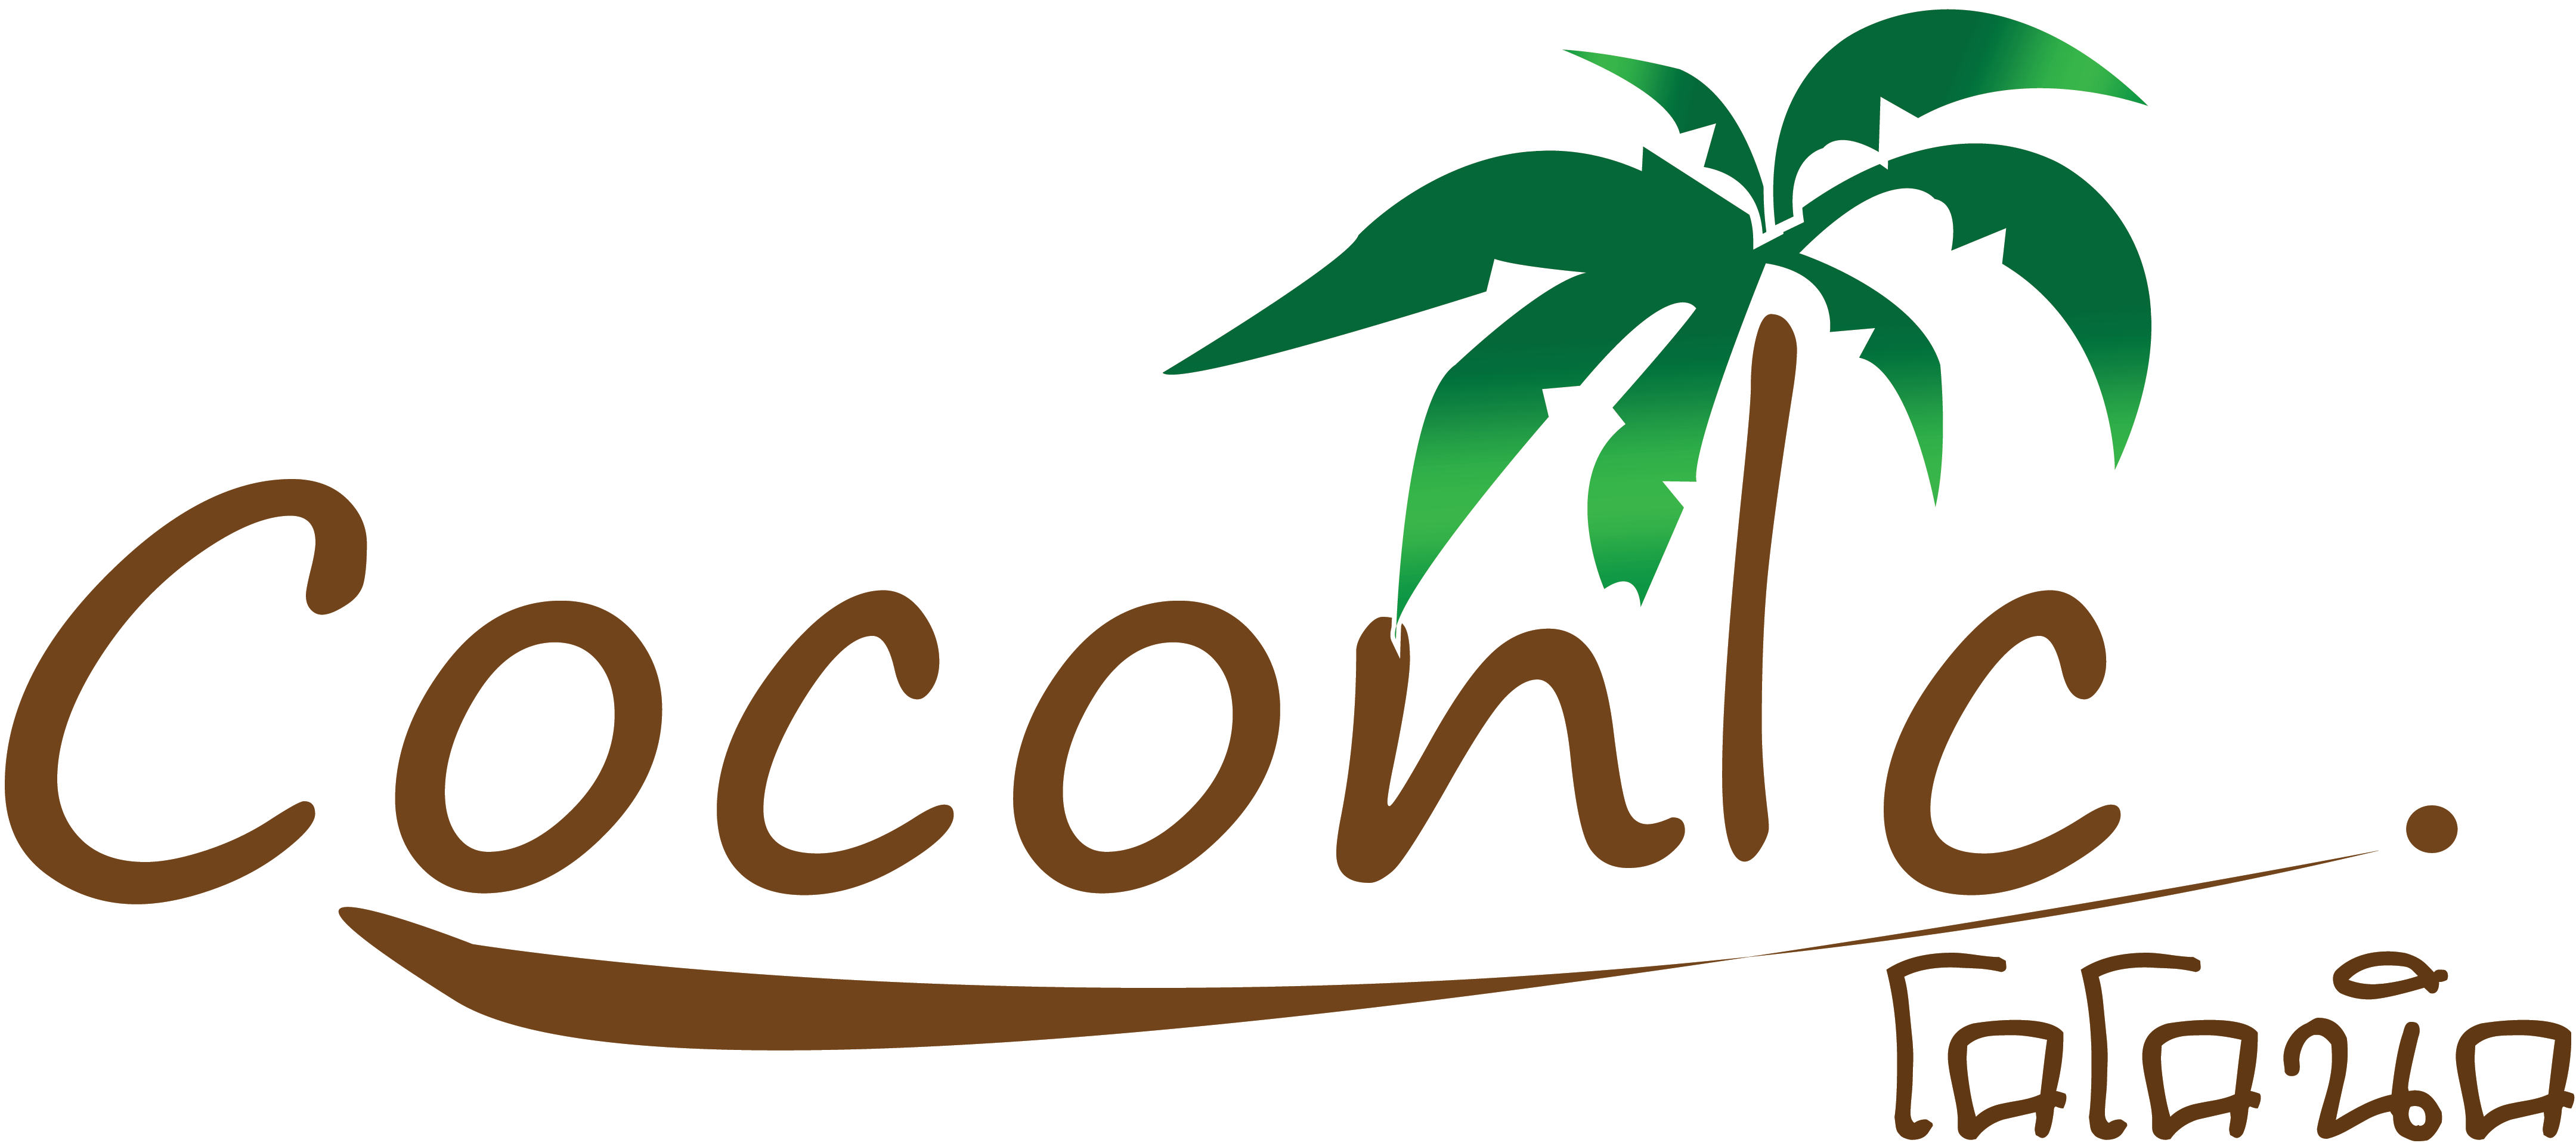 Coconut Coconic